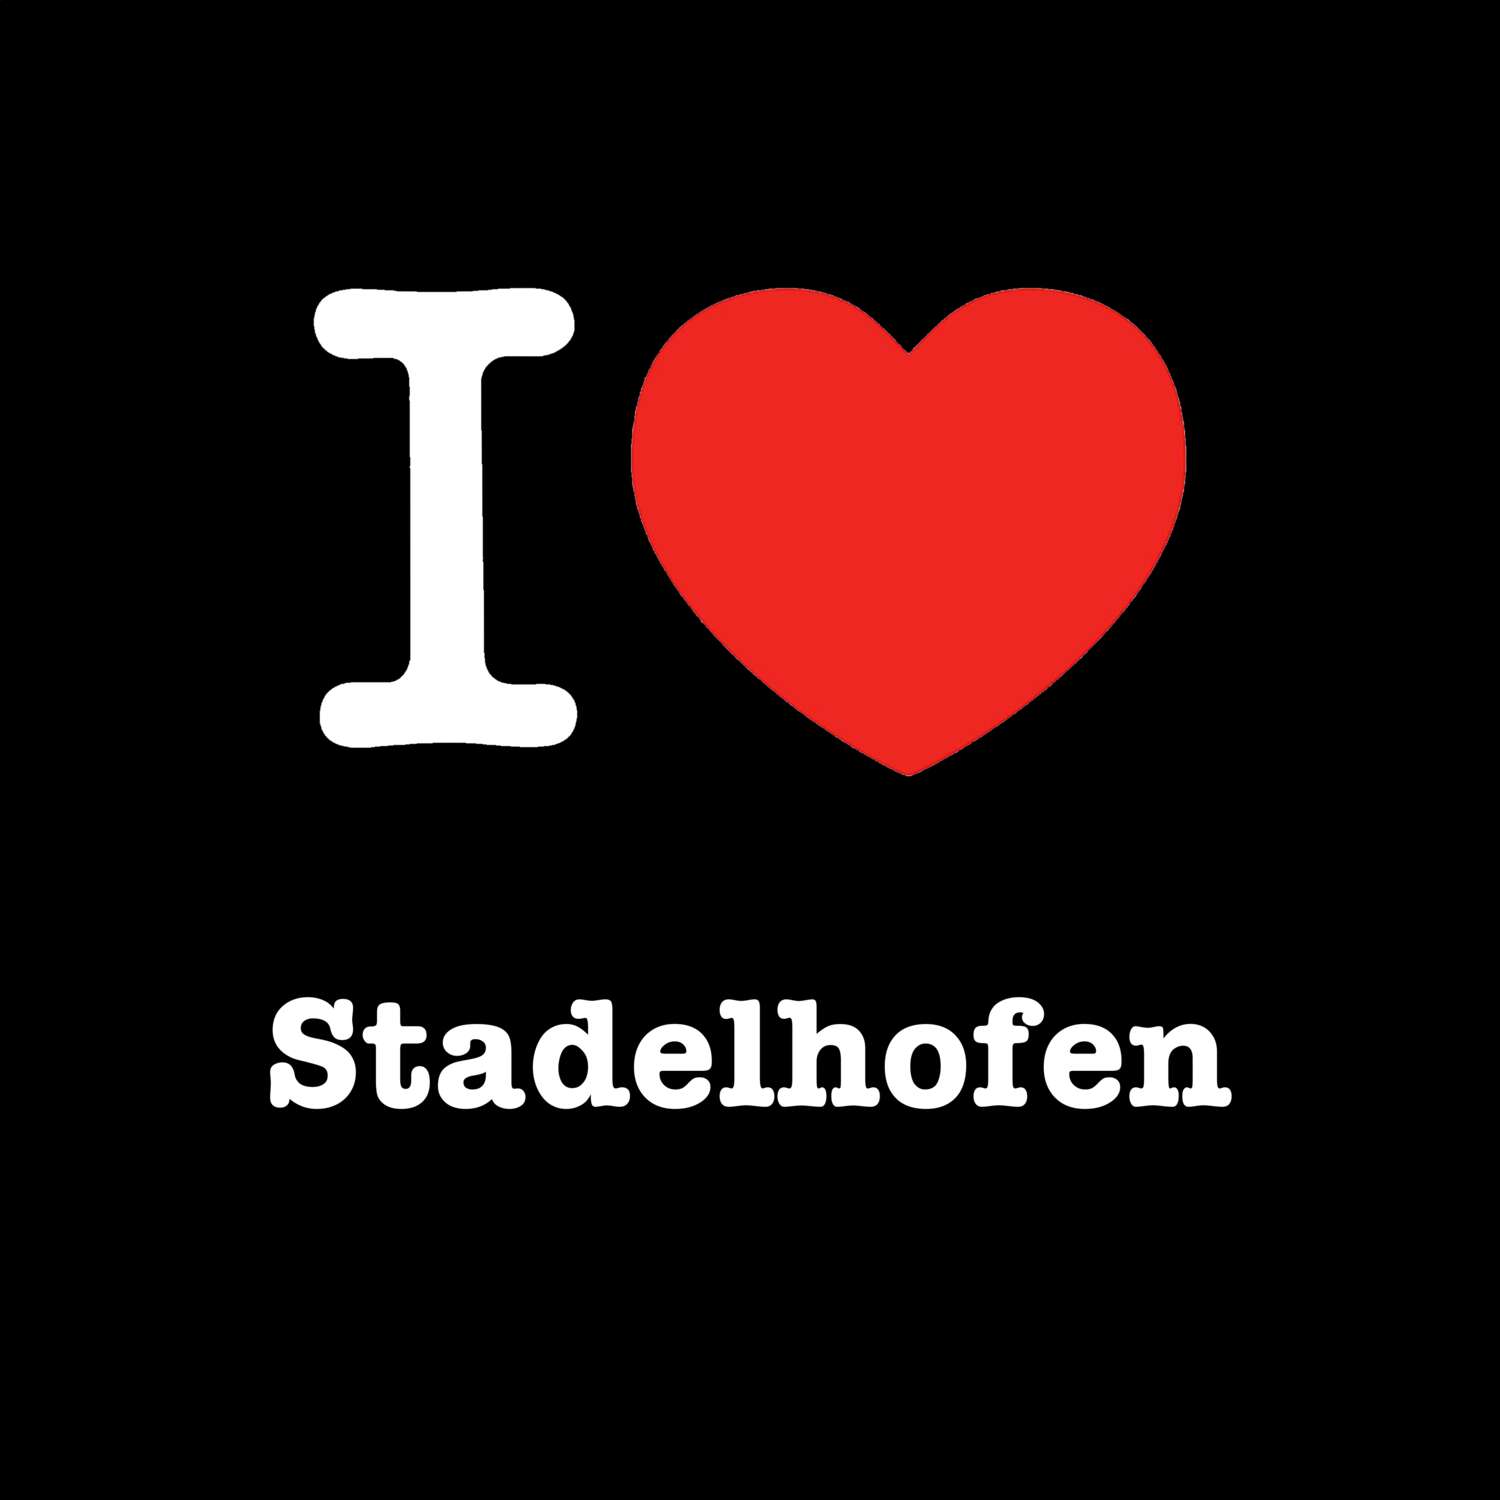 Stadelhofen T-Shirt »I love«